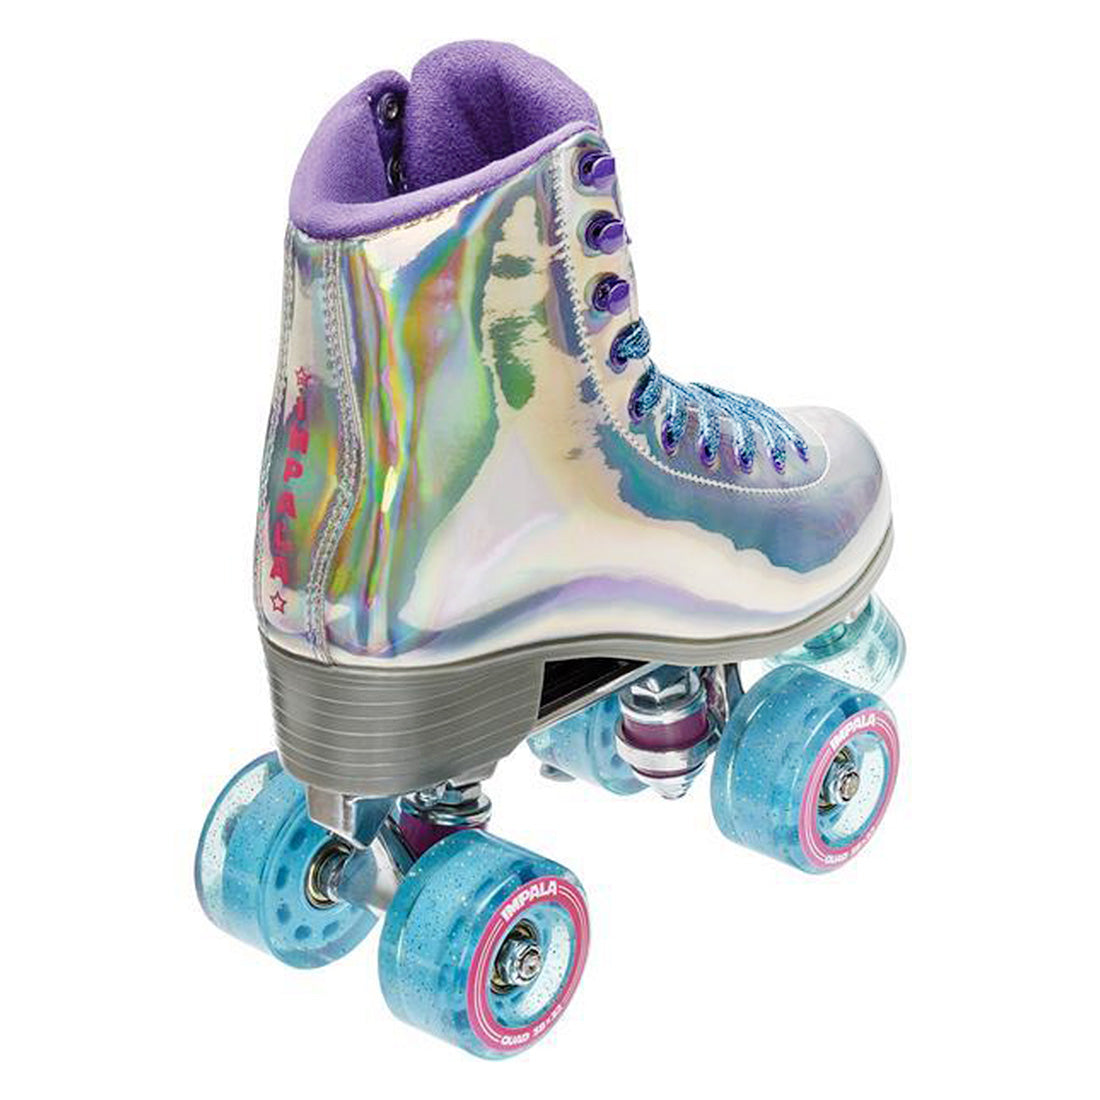 Impala Sidewalk - Holographic Roller Skates